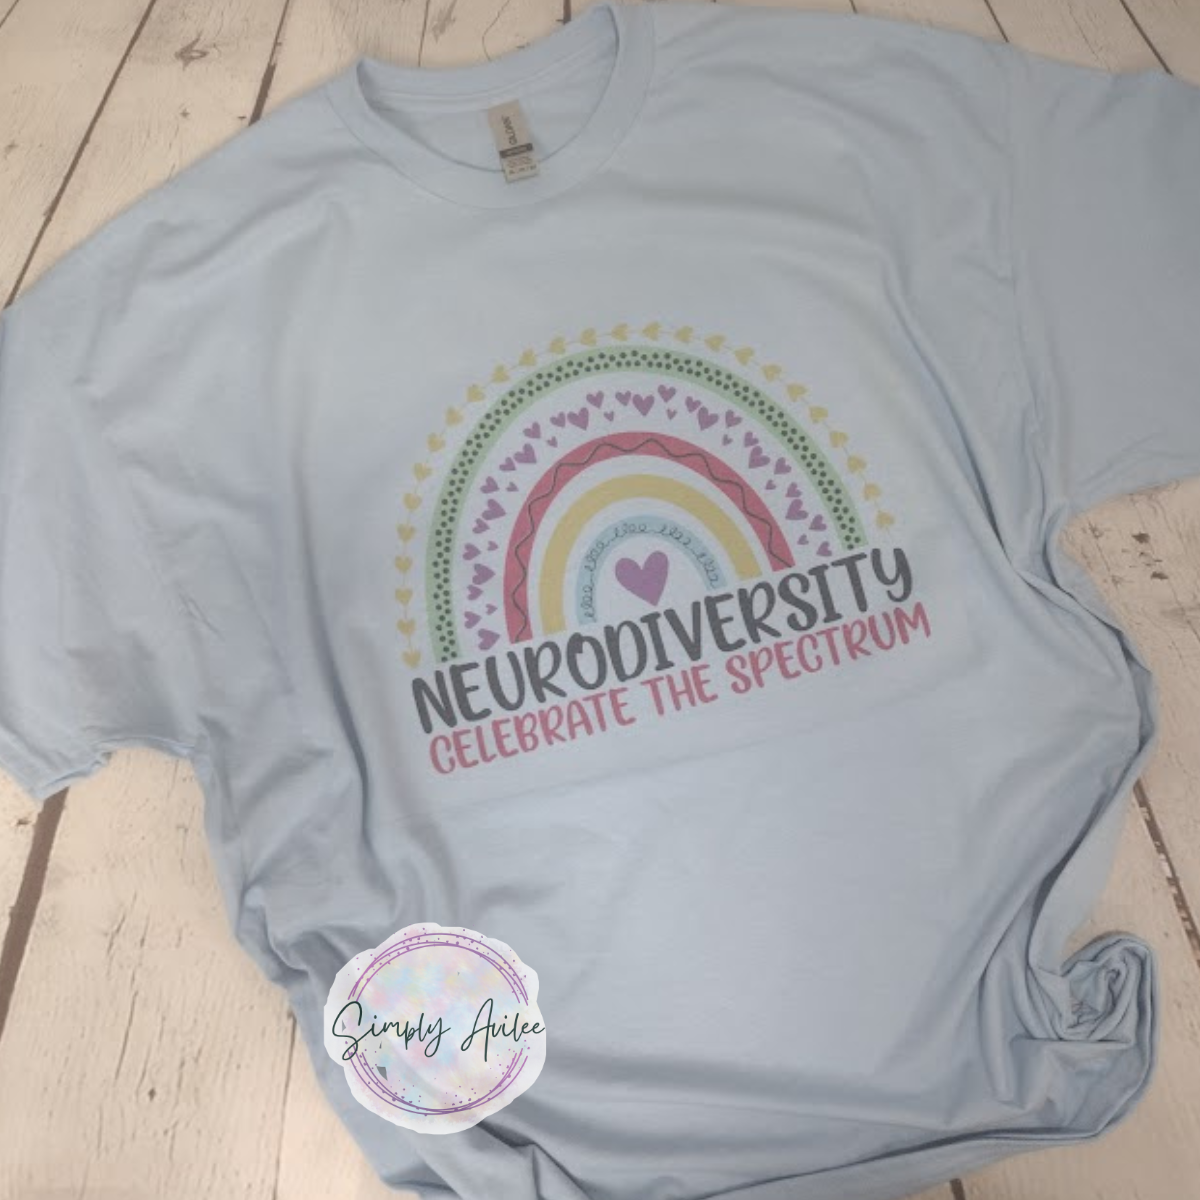 Neurodiversity, Celebrate the Spectrum Tee